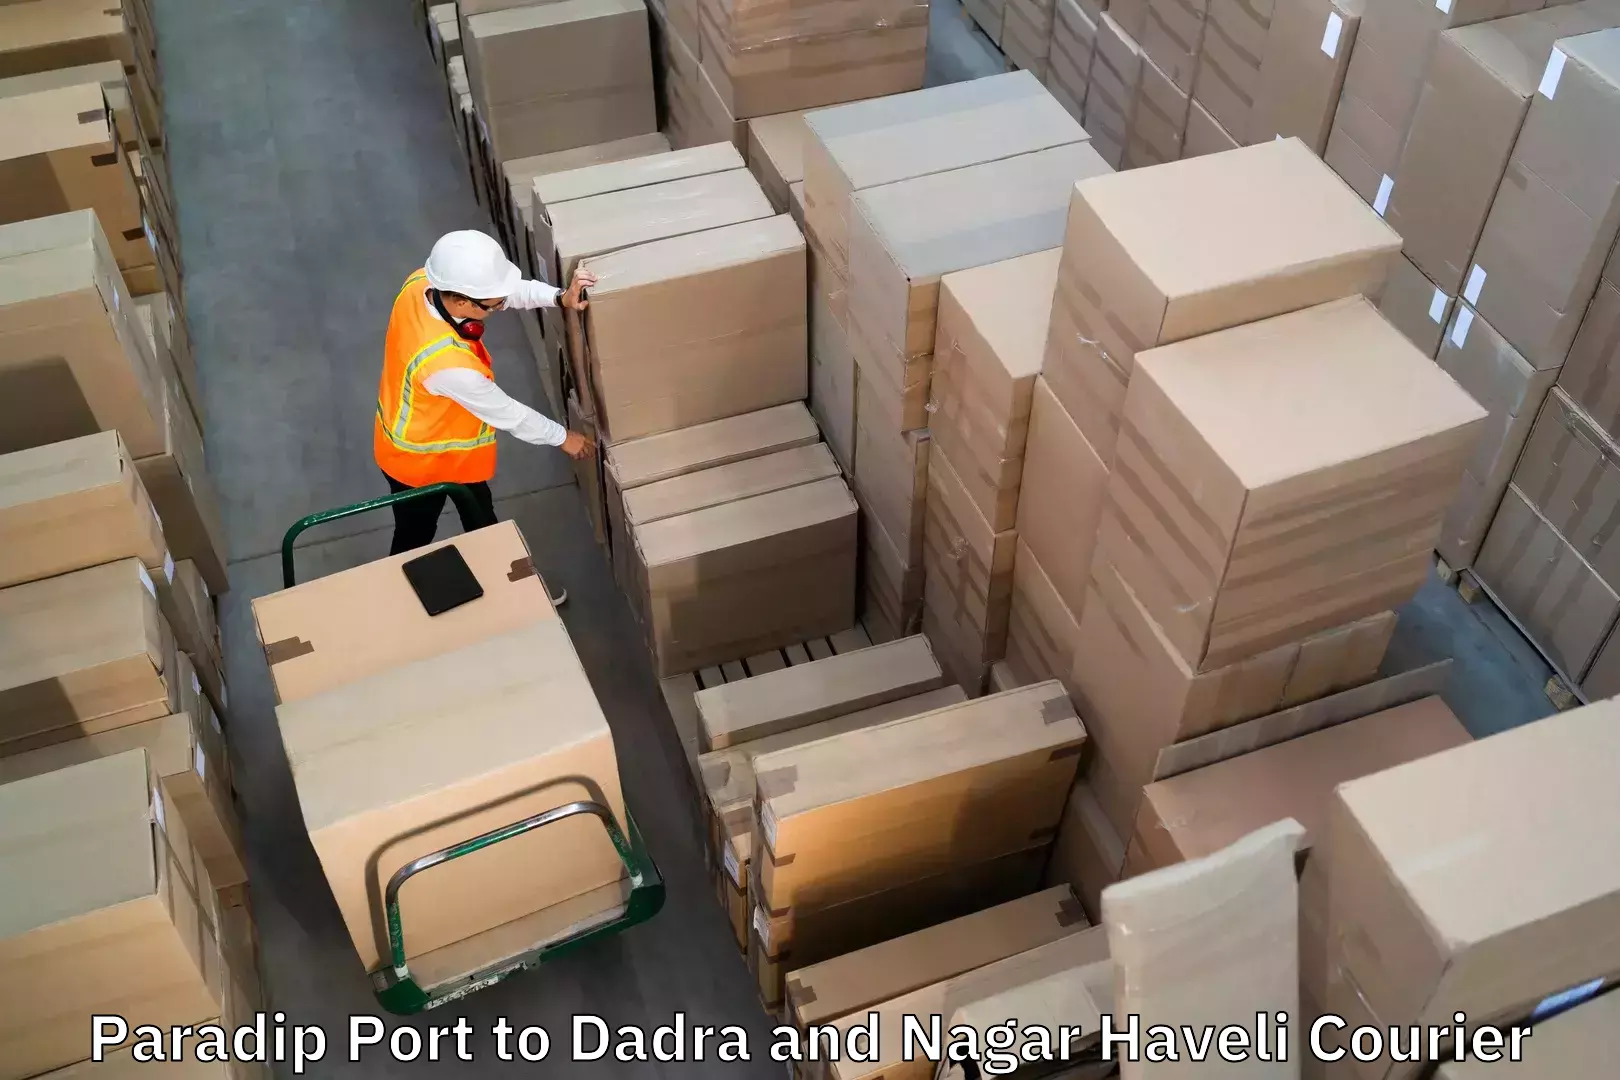 Baggage shipping service Paradip Port to Silvassa